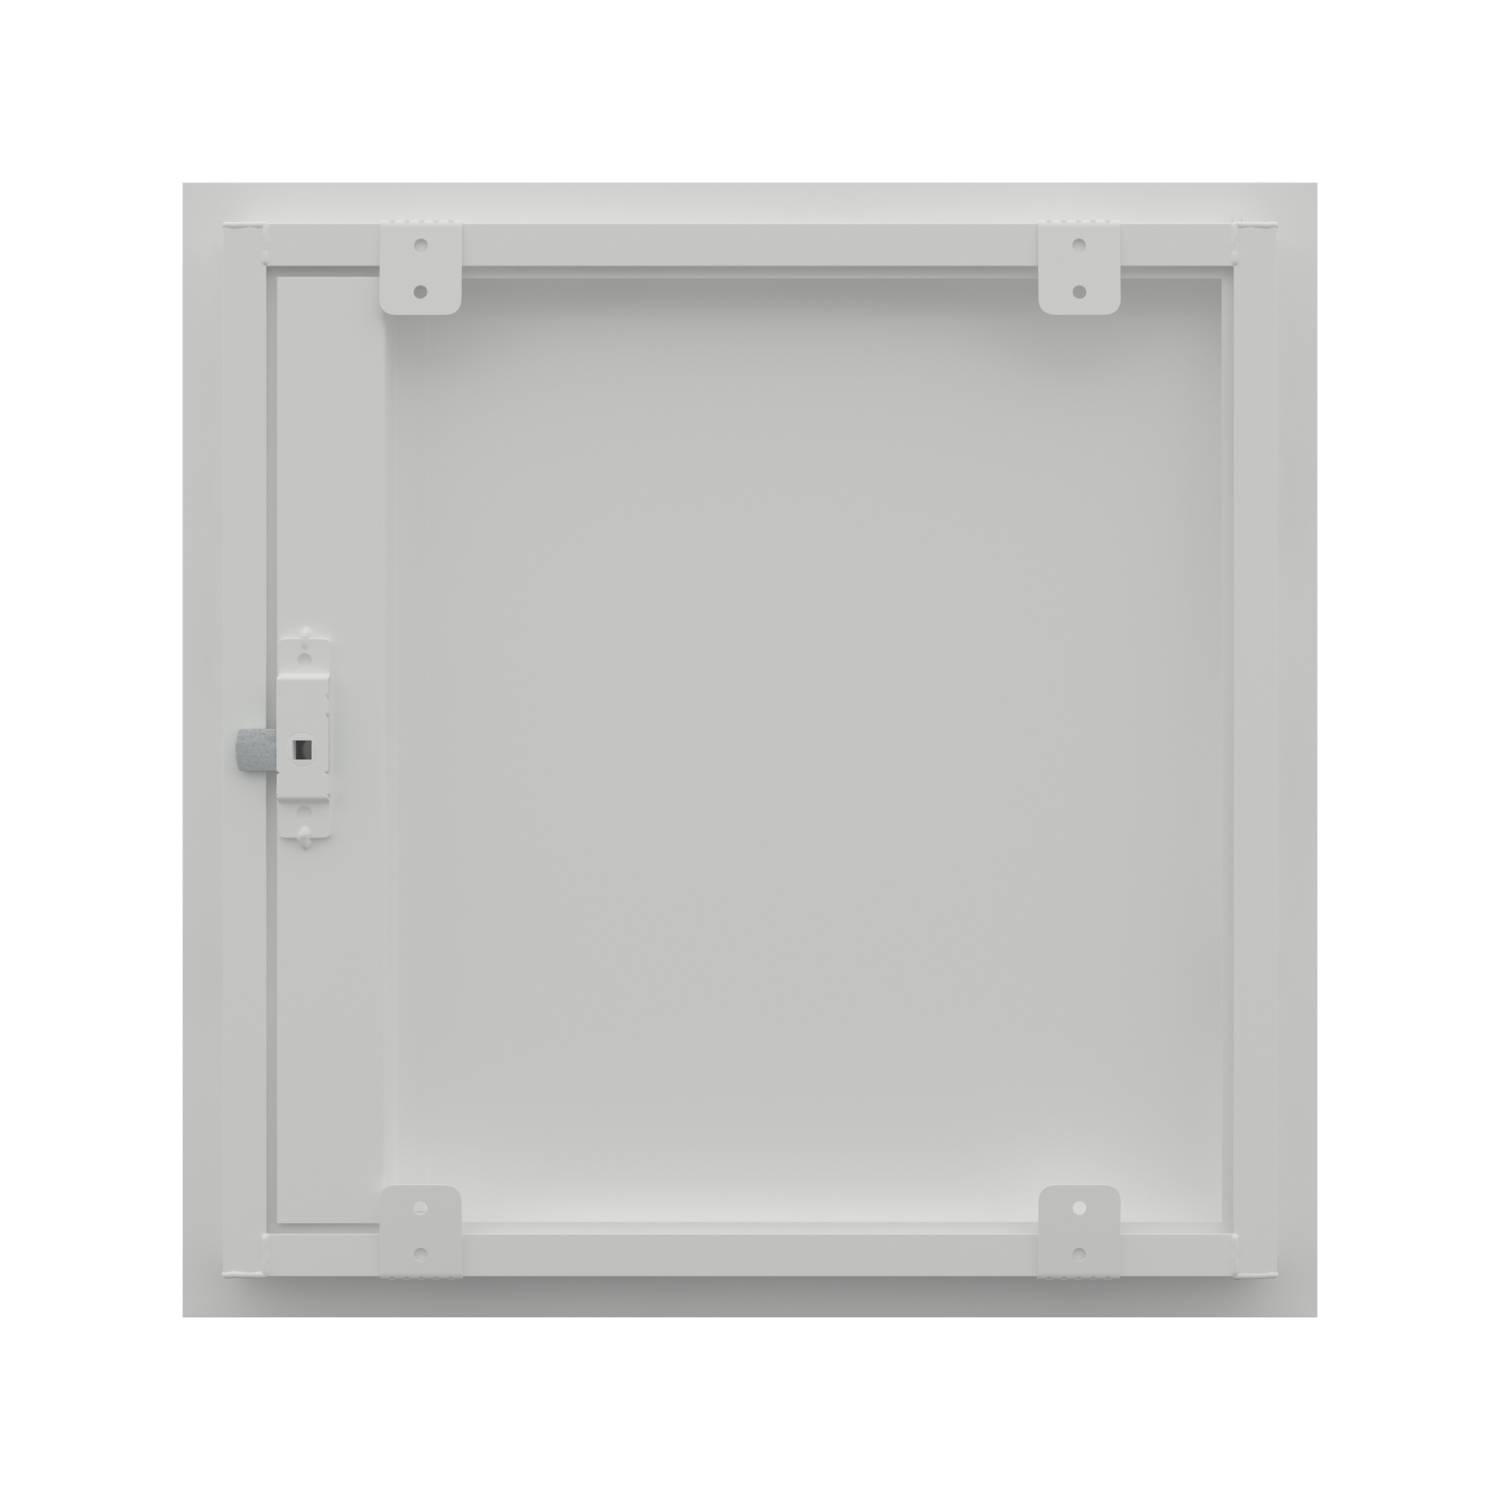 Access Panel Shallow Metal Door - Gas Flue Inspection Hatch